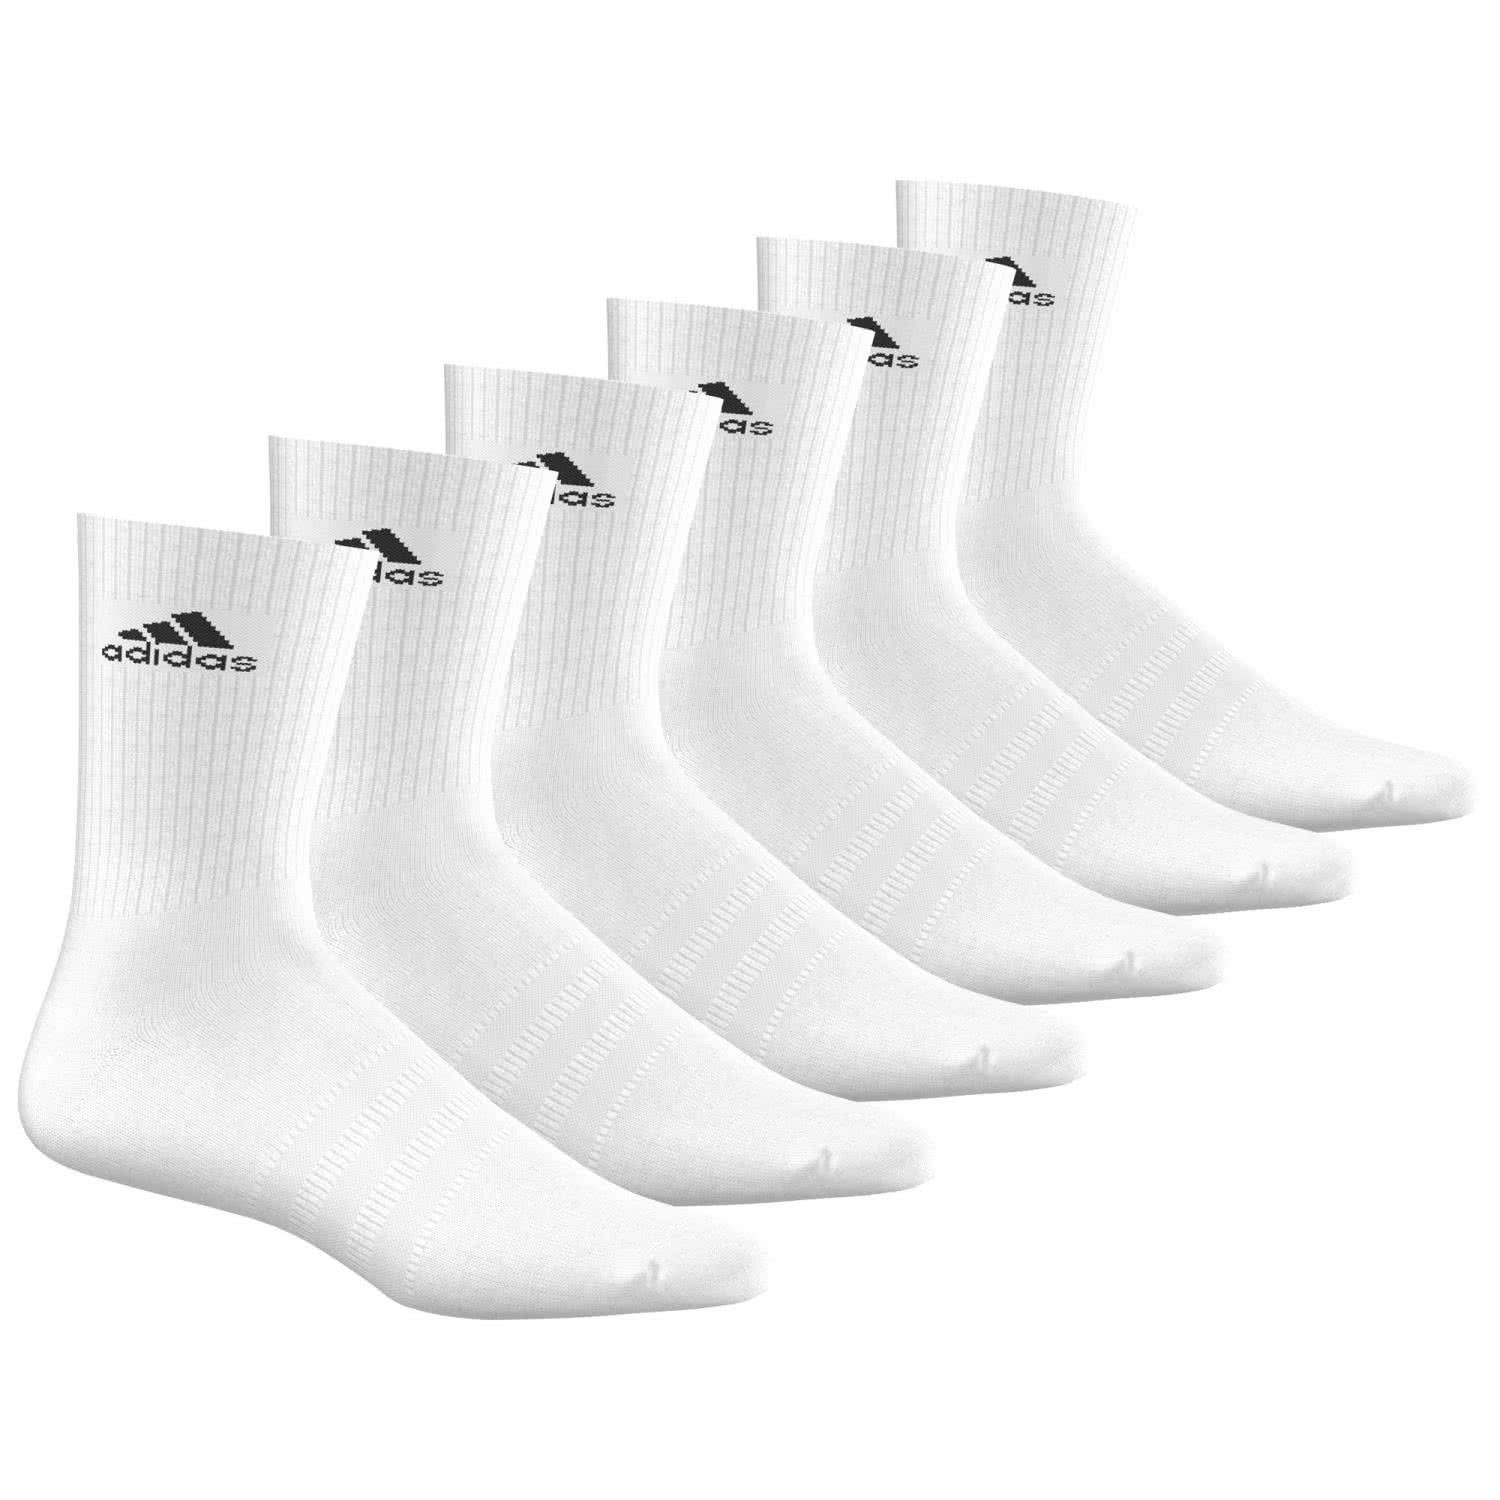 adidas CUSHIONED CREW Tennissocken Sportsocken Damen Herren Unisex 6 Paar, Farbe:White, Socken & Strümpfe:46-48